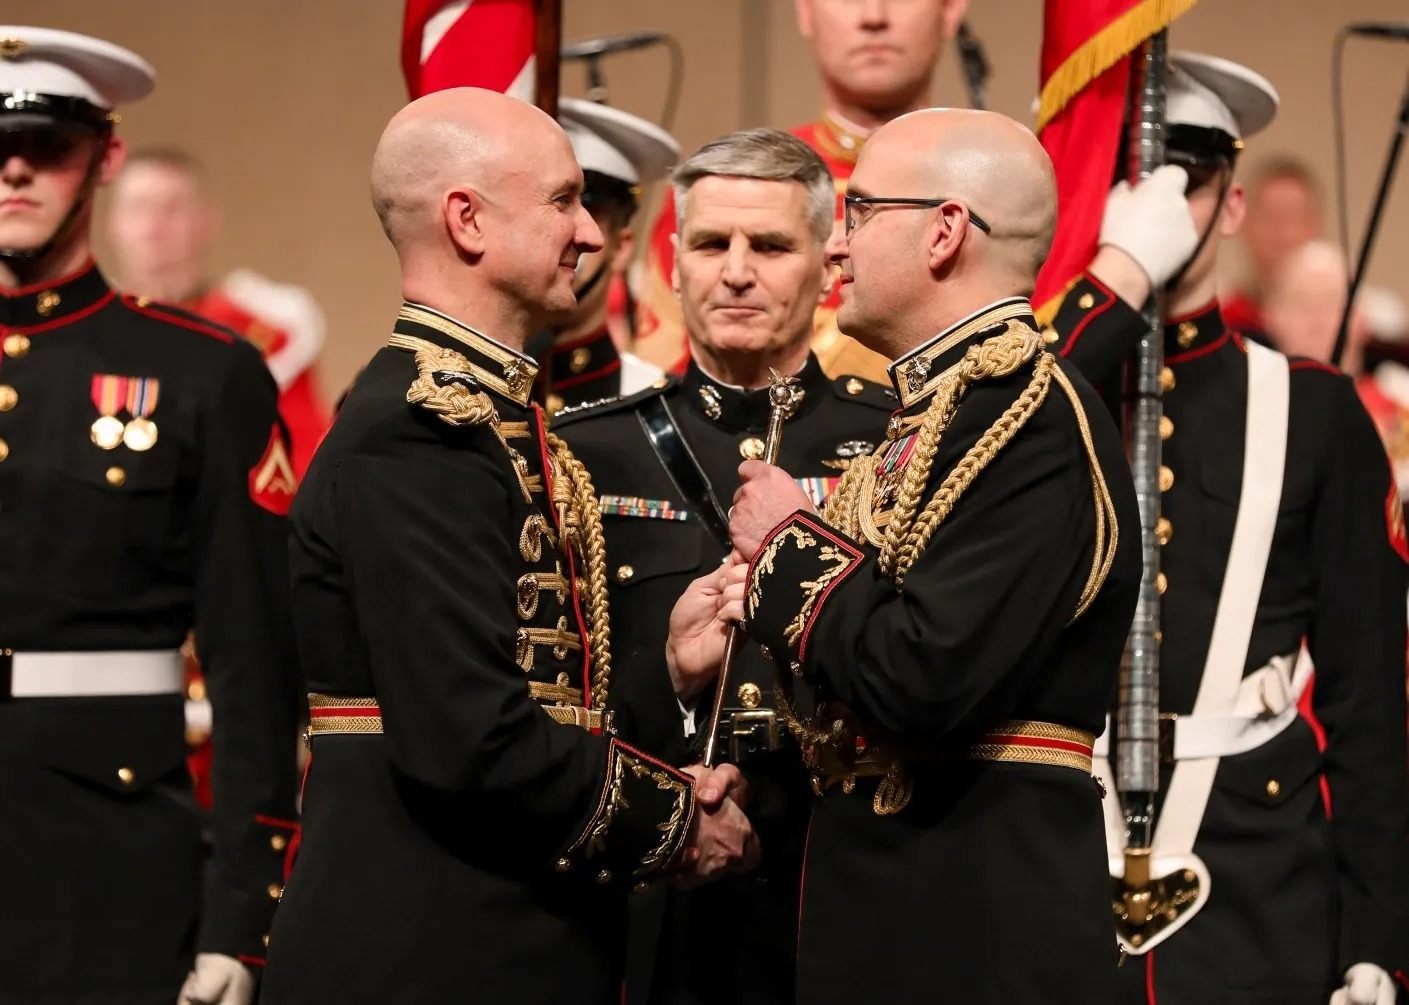 Three people in U.S. Marine dress uniform stand on stage